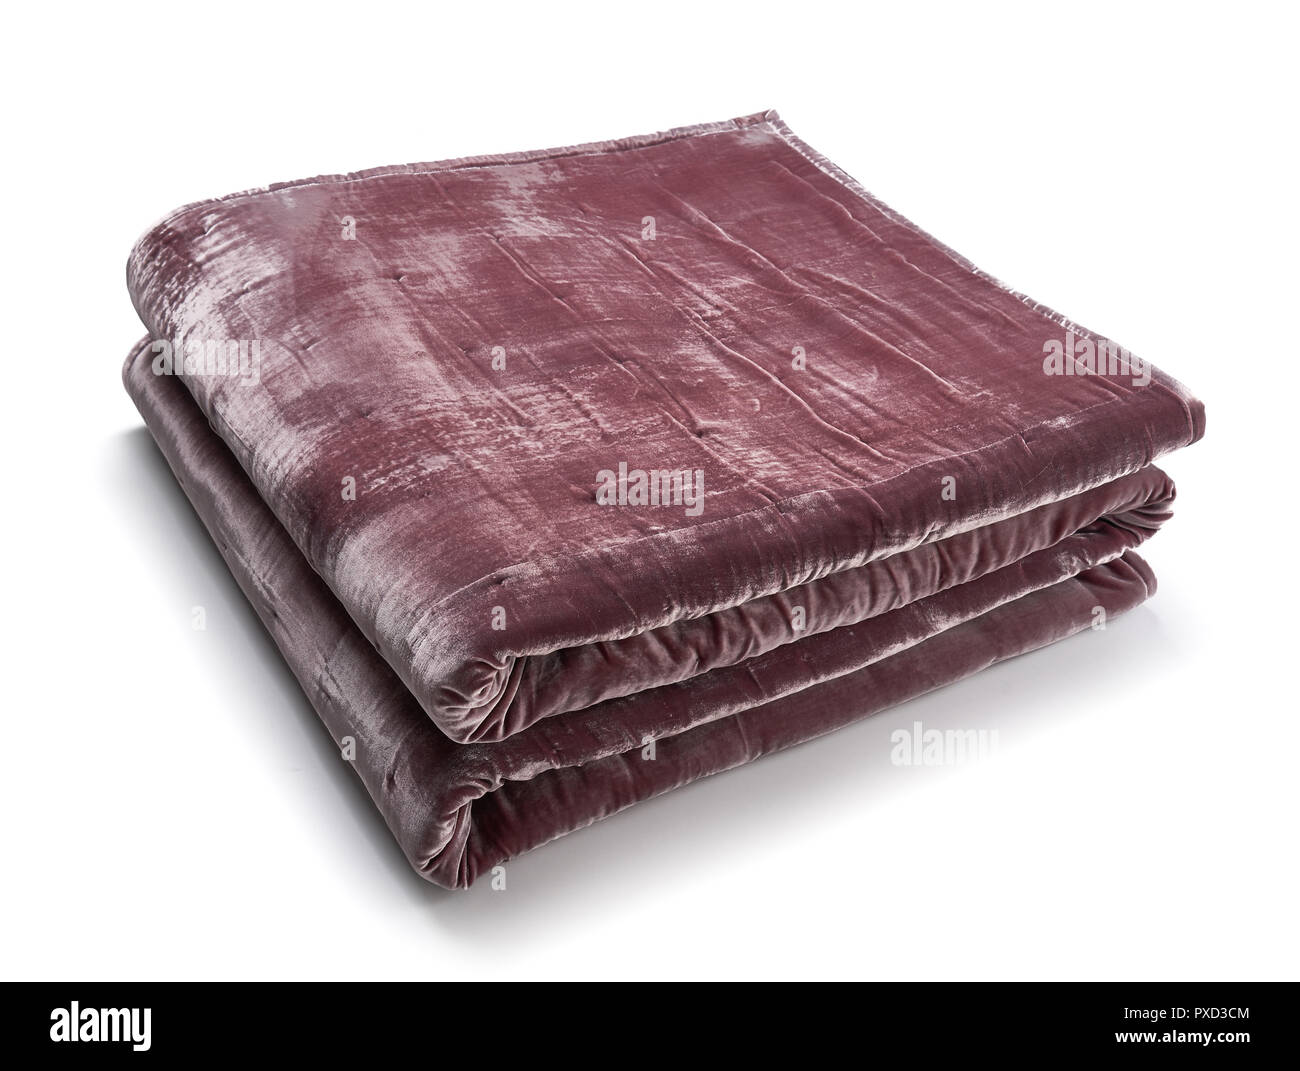 Pink blanket made of velor fabric, neatly folded, isolated on white background Stock Photo